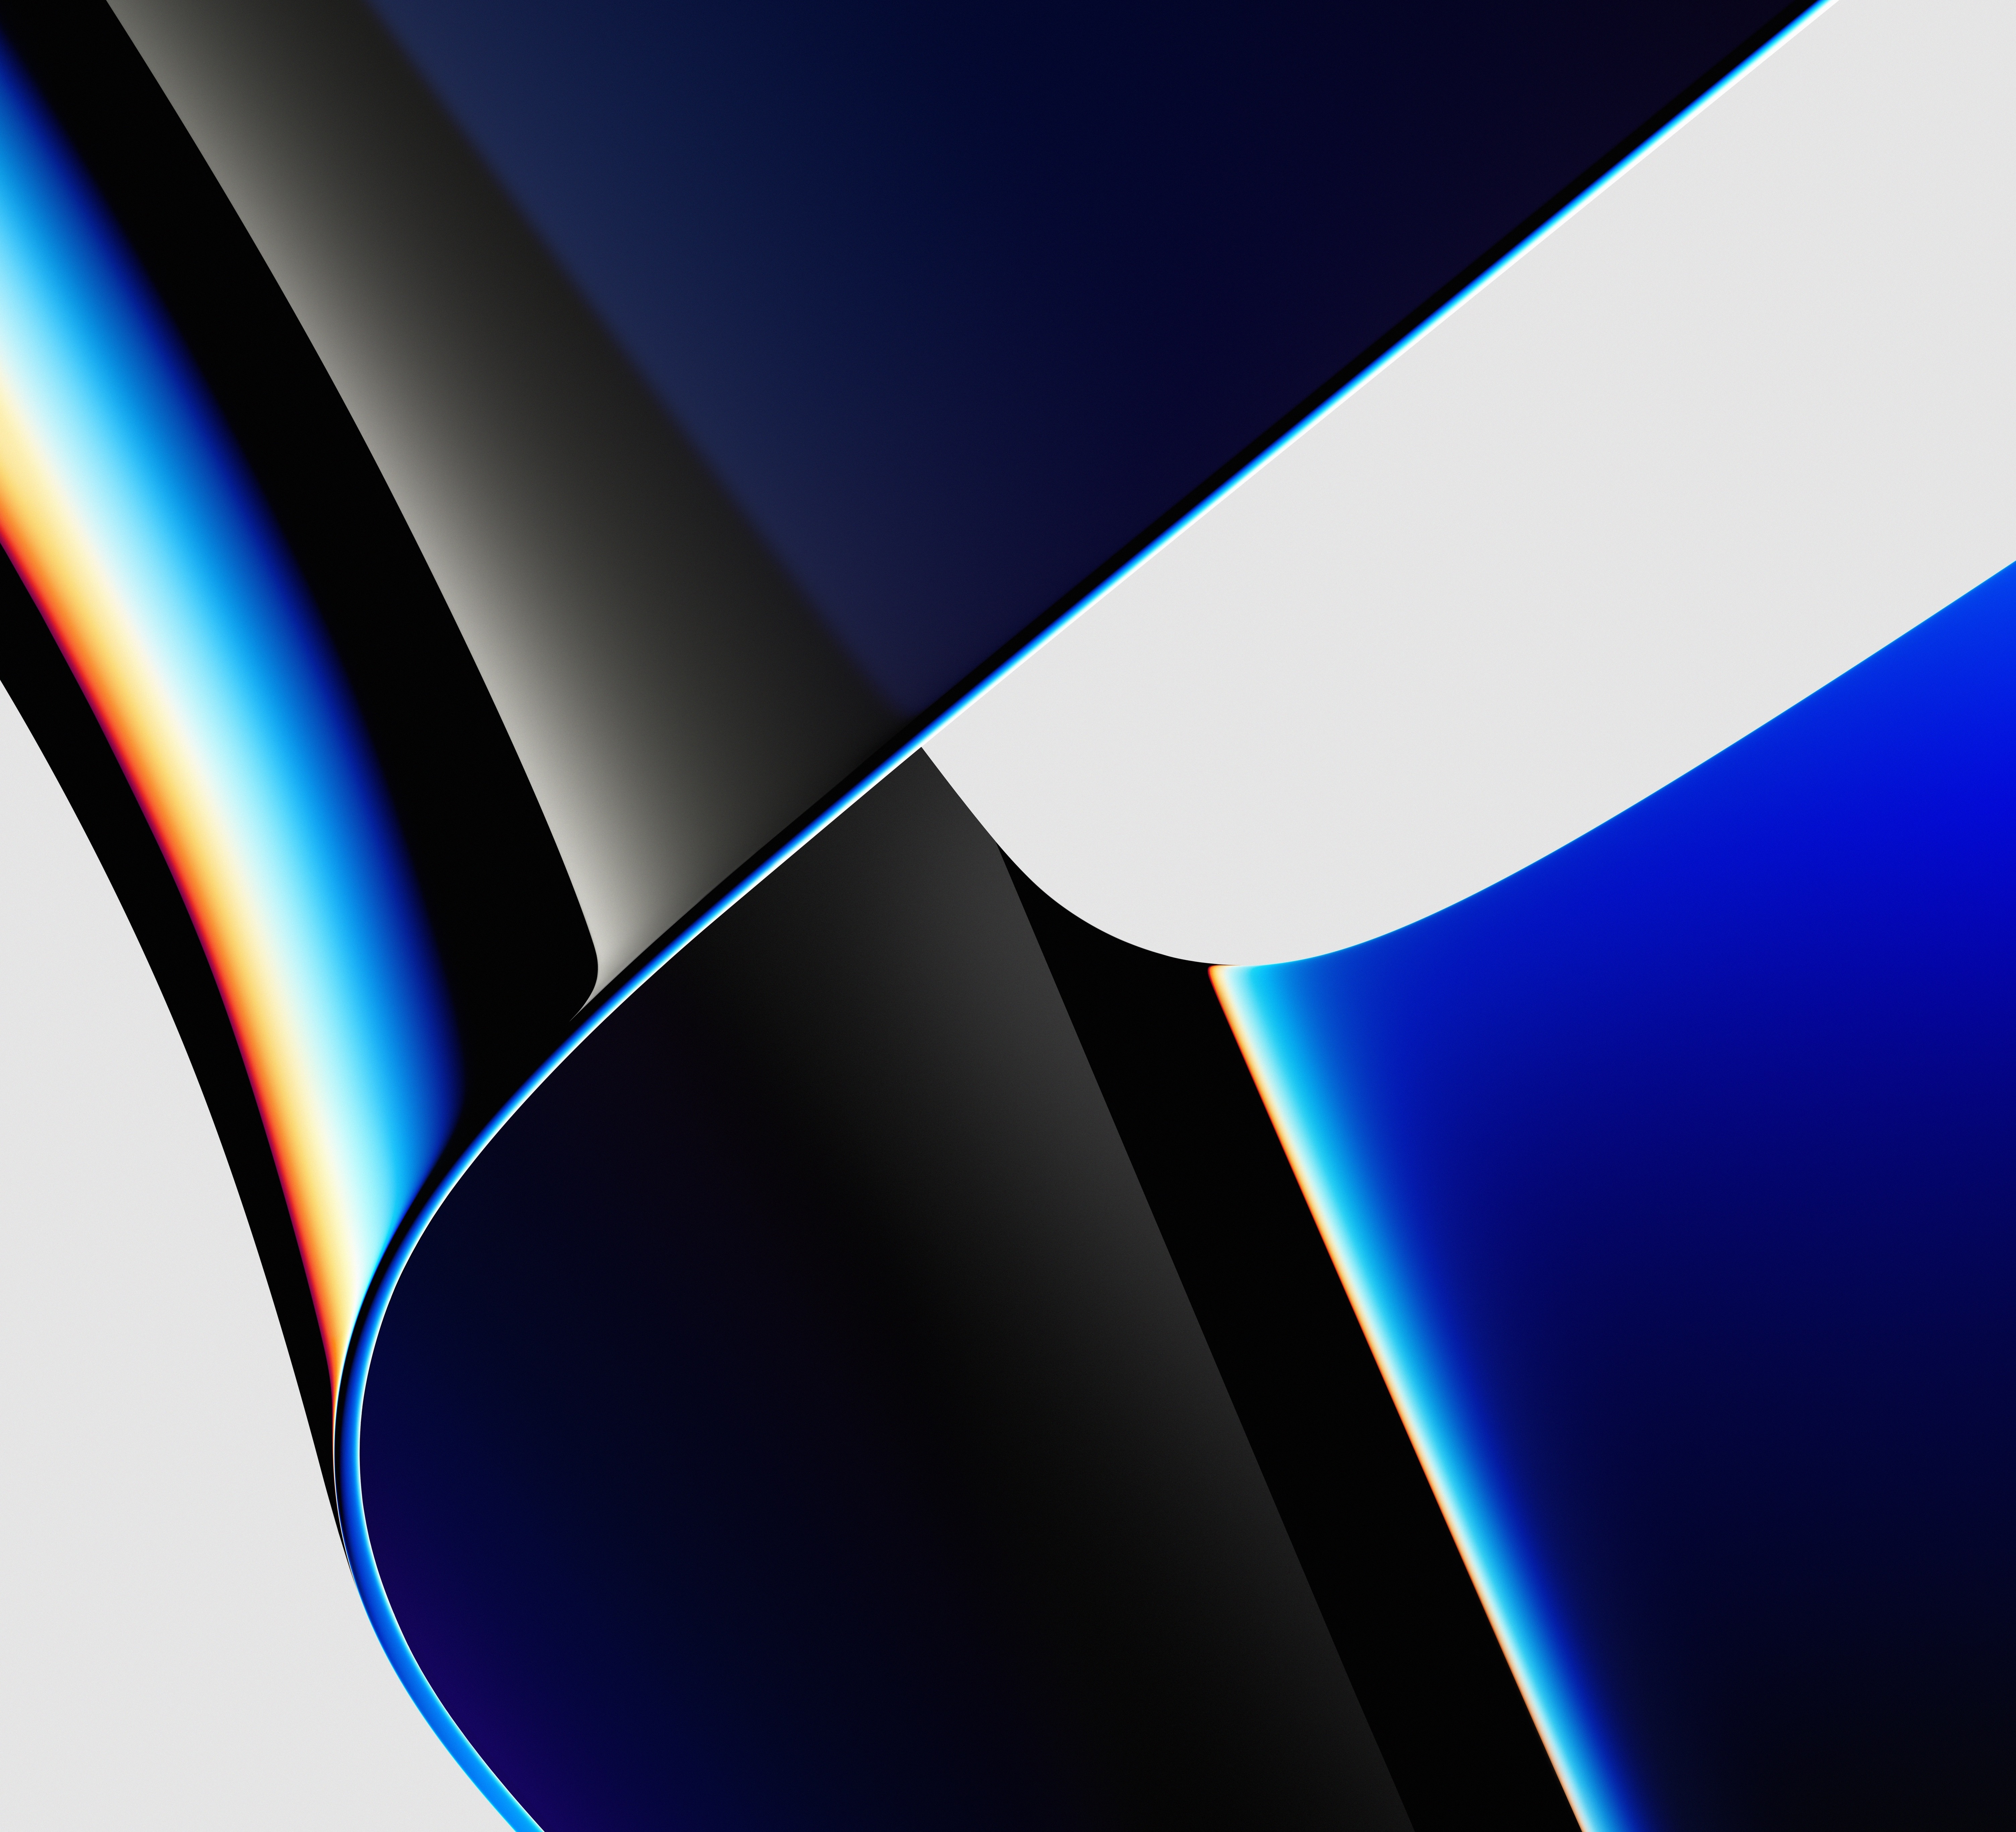 HD wallpaper, Blue, White Background, 5K, Apple Macbook Pro, Stock, Apple Event 2021, 2021